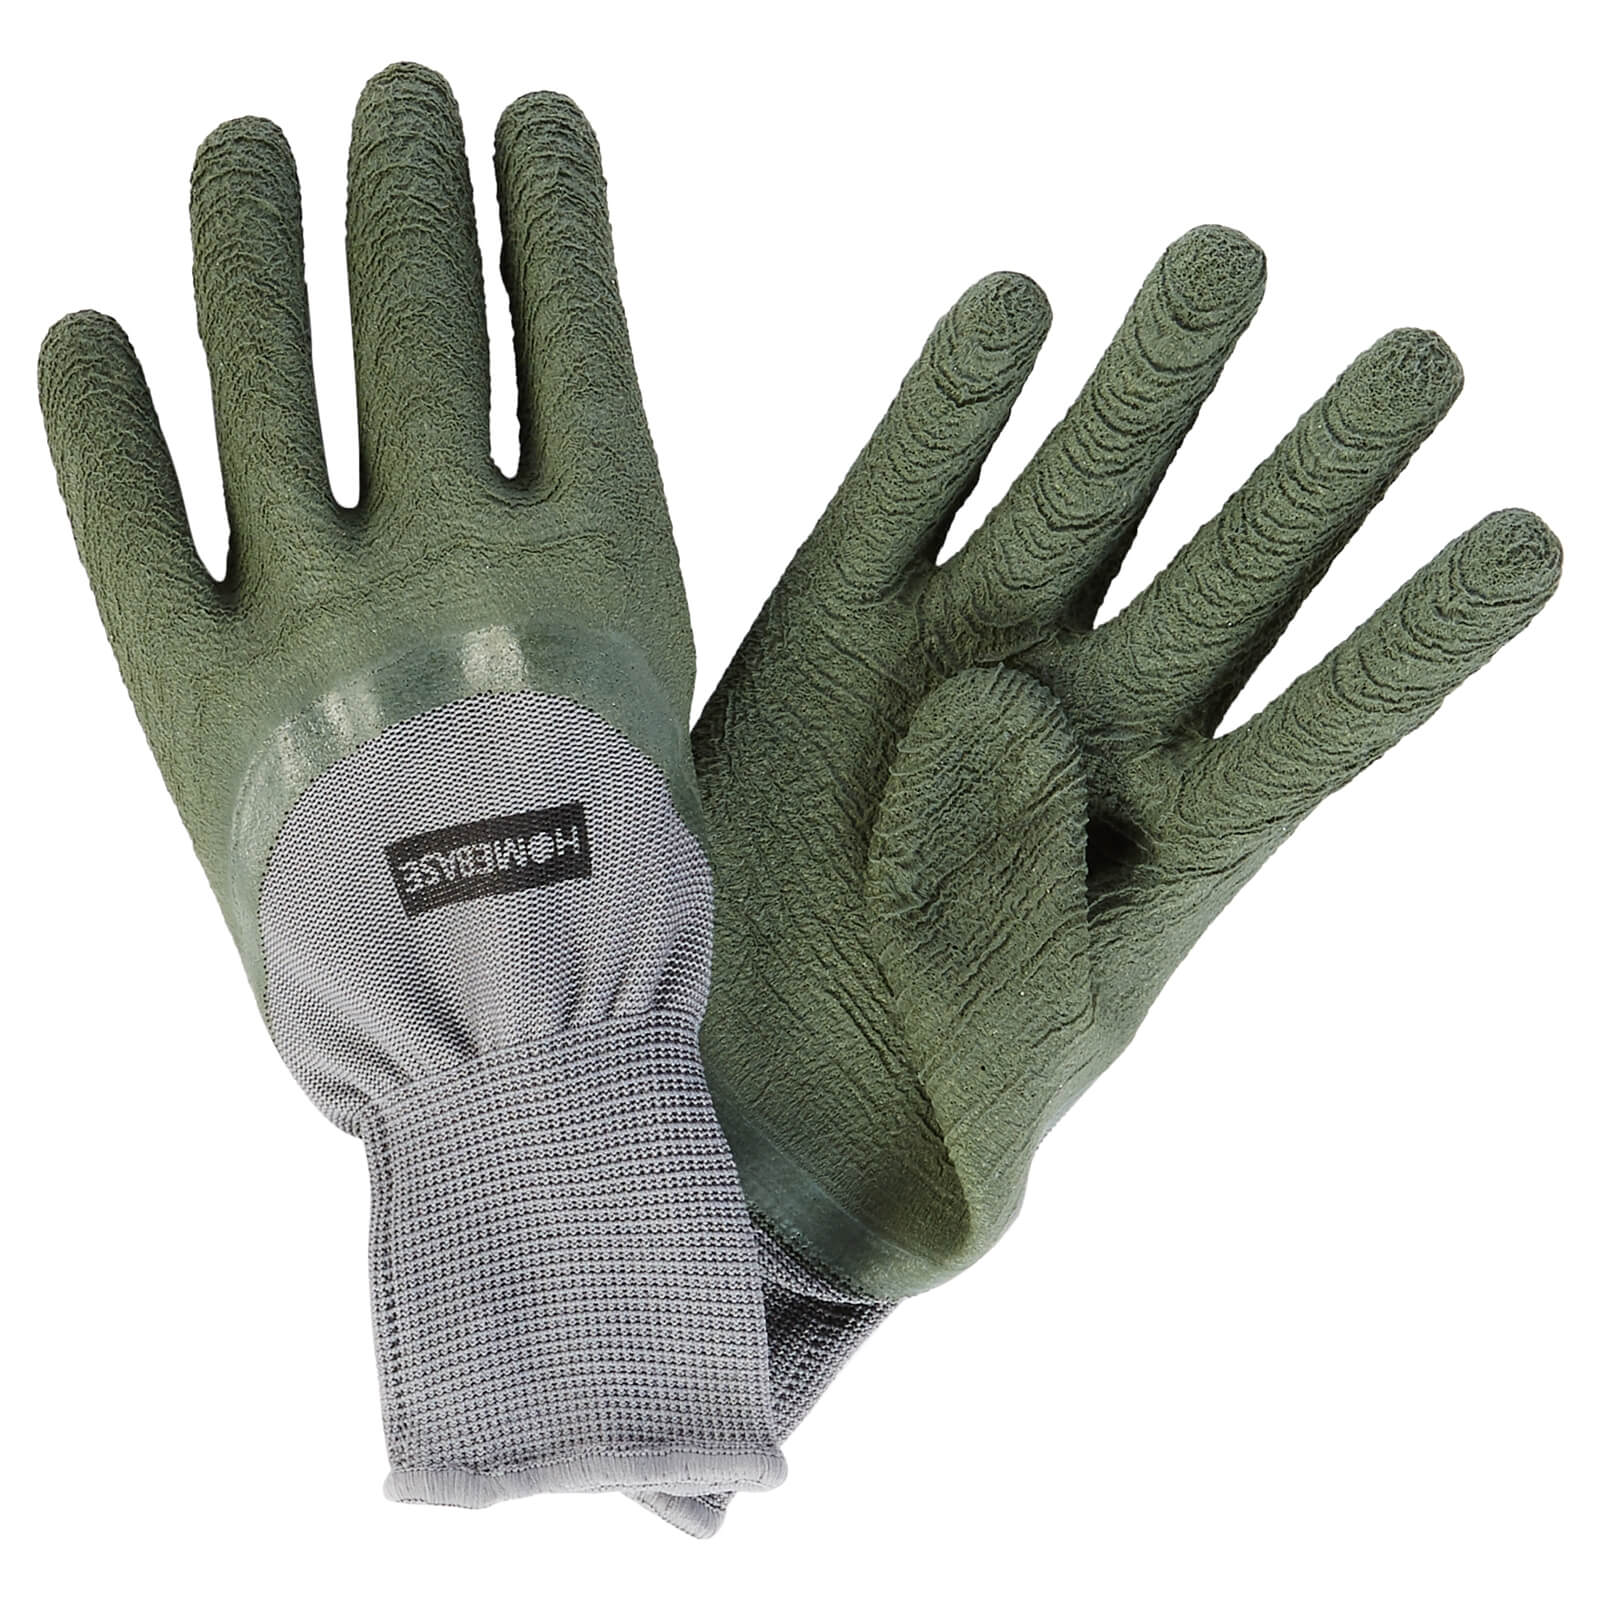 Homebase Mixed Glove - Large (3 Pack)